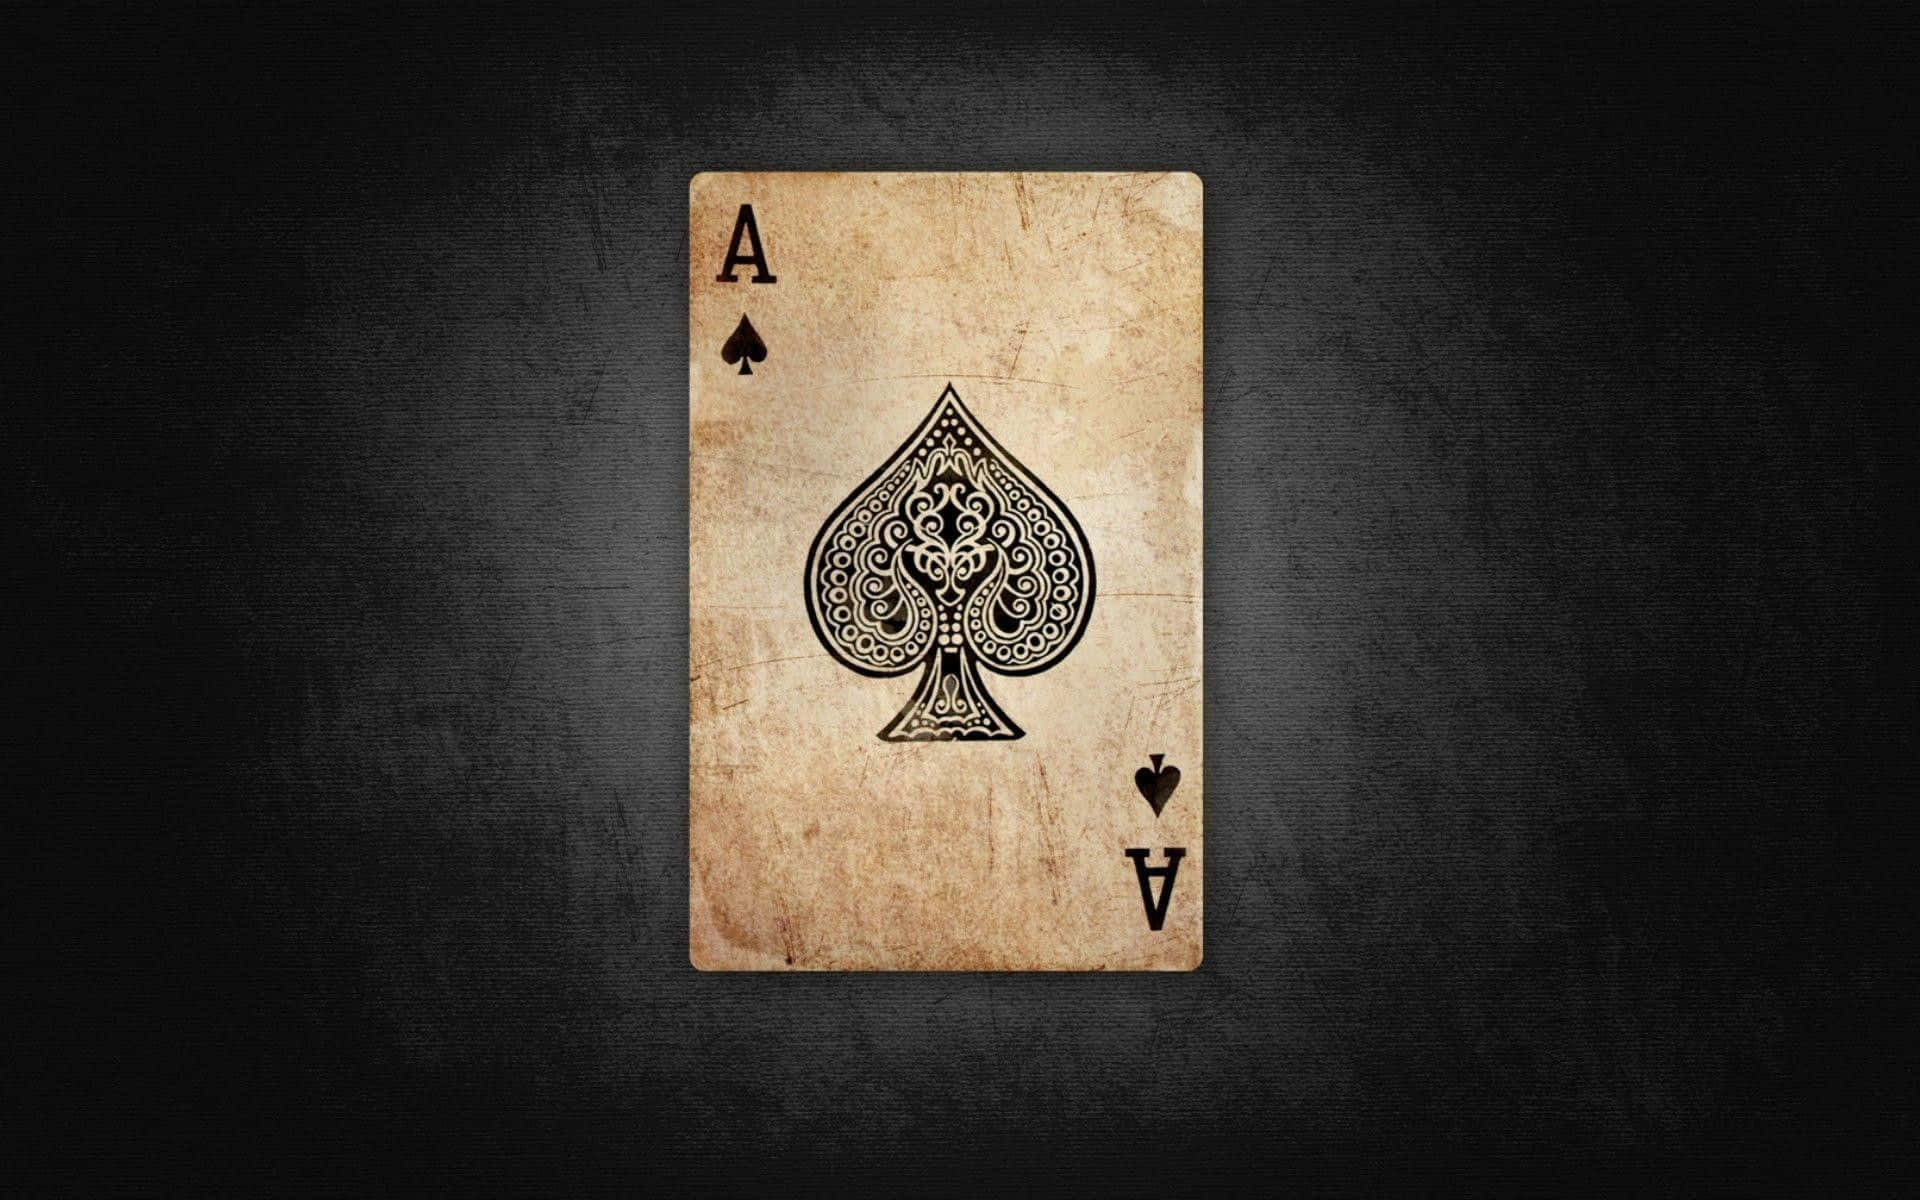 A Ace Of Spades On A Black Background